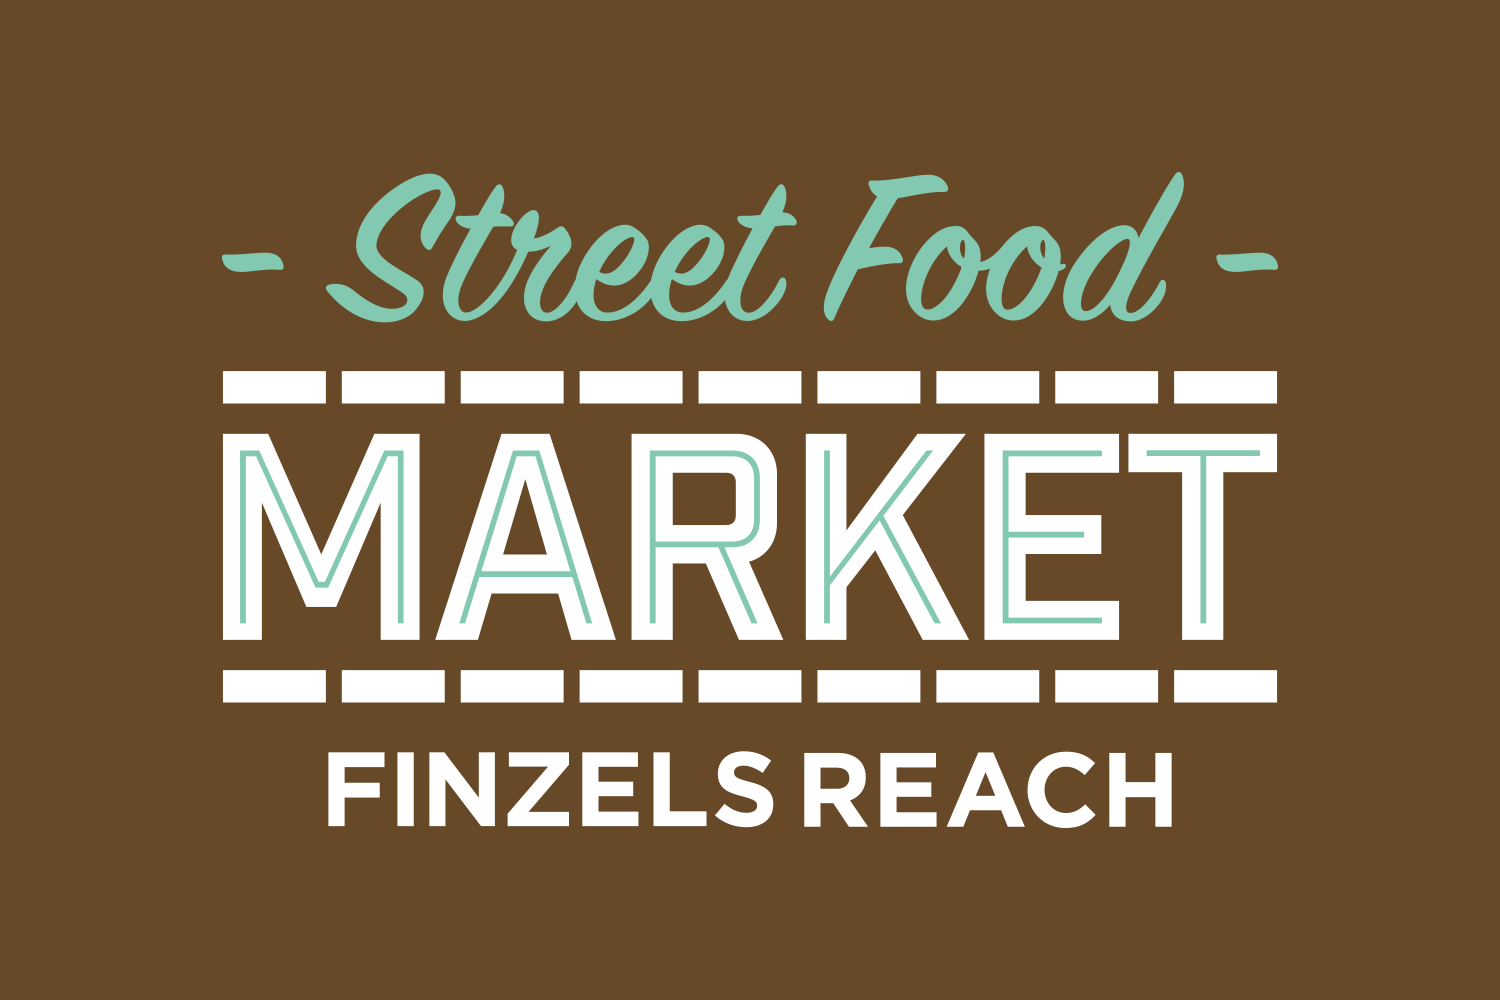 Food Market Logo - Finzels Reach Street Food Market Noon Design